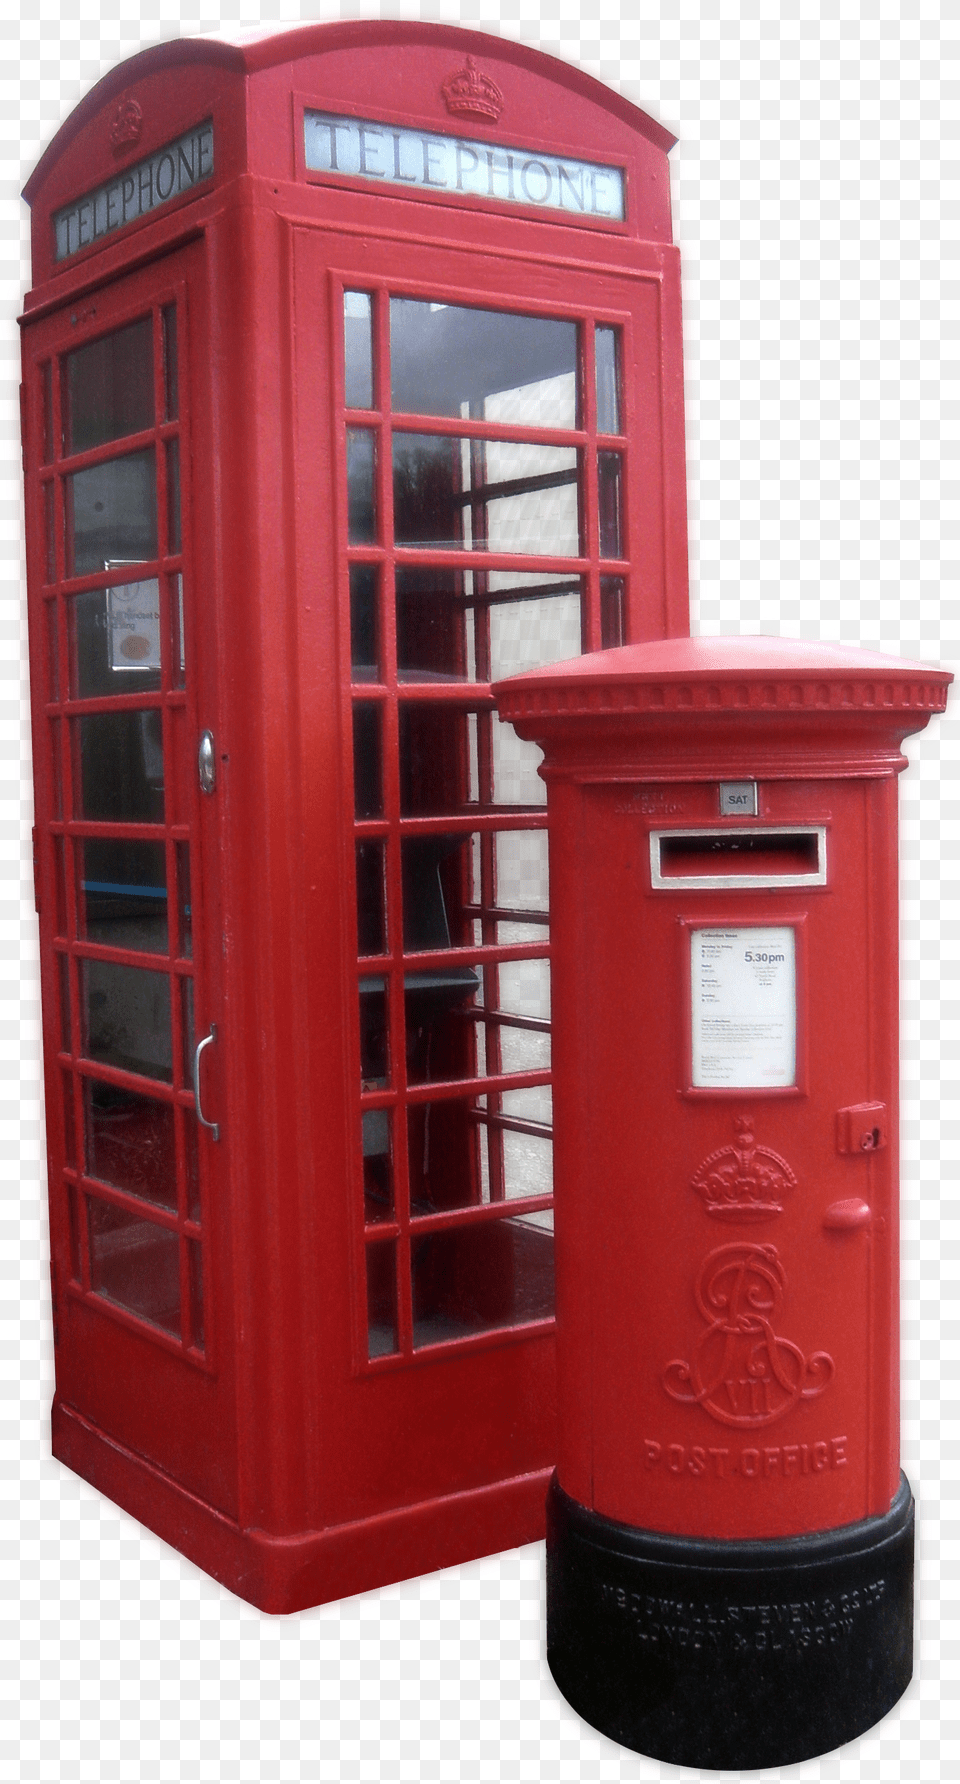 Telephone Box And Edward Vii Pillar Box Amberley London Telephone Box Photo Booth, Mailbox Png